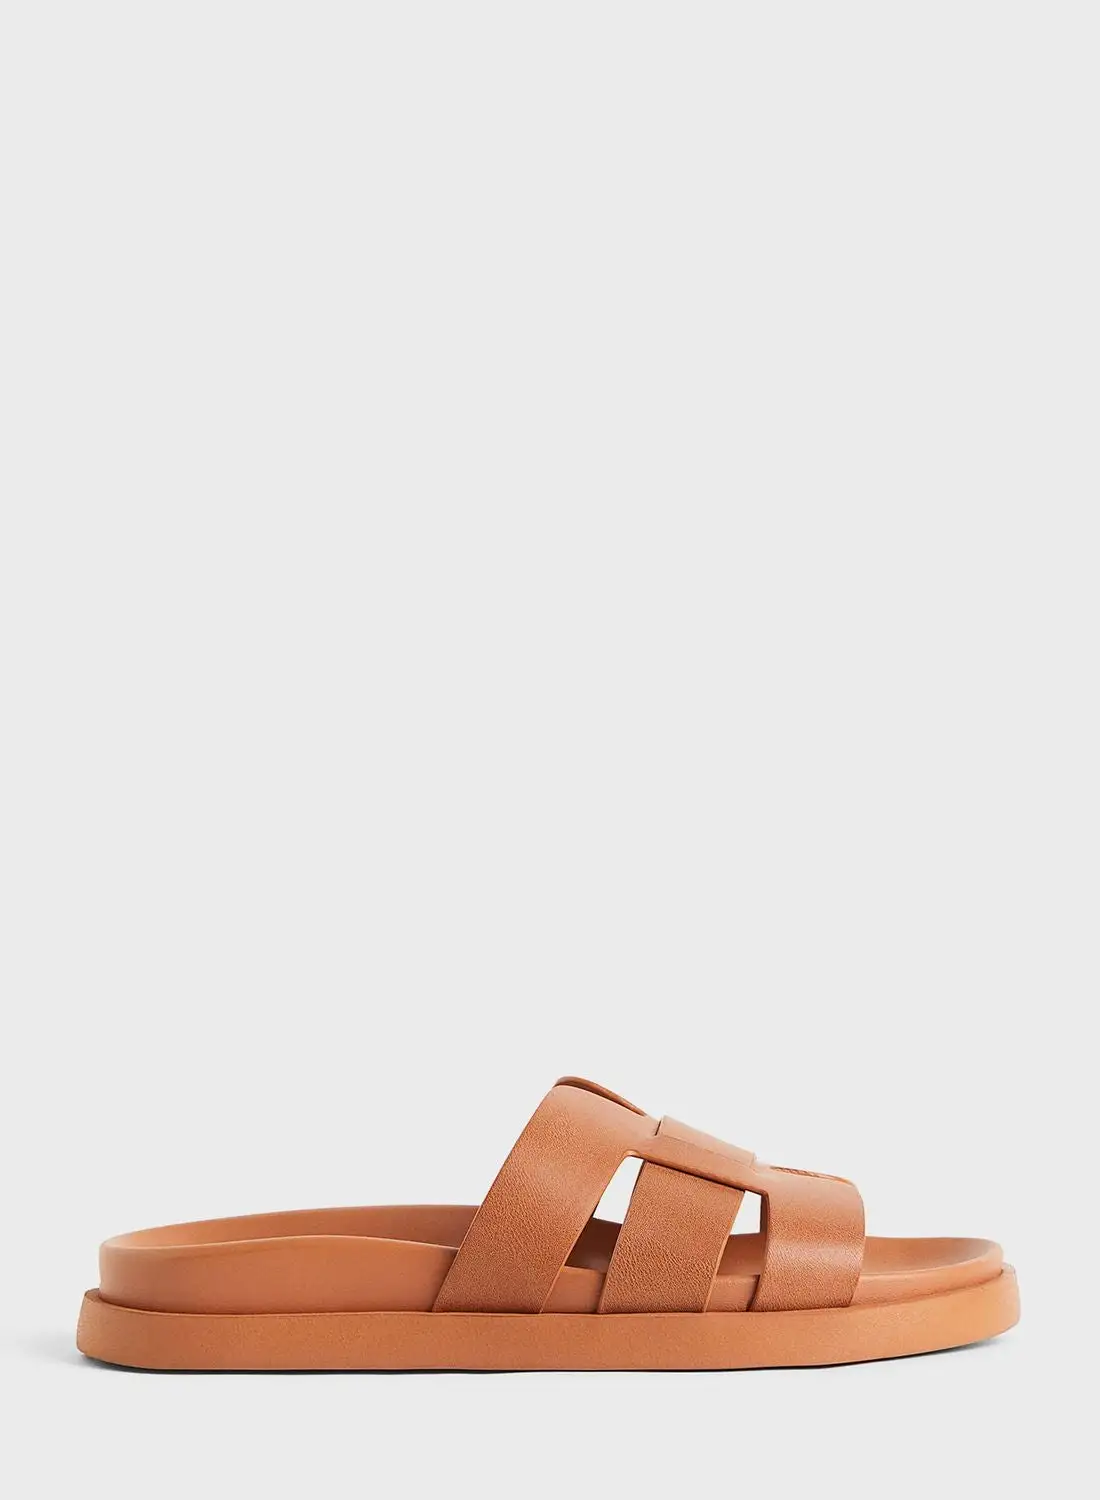 H&M Open Toe Flat Sandals